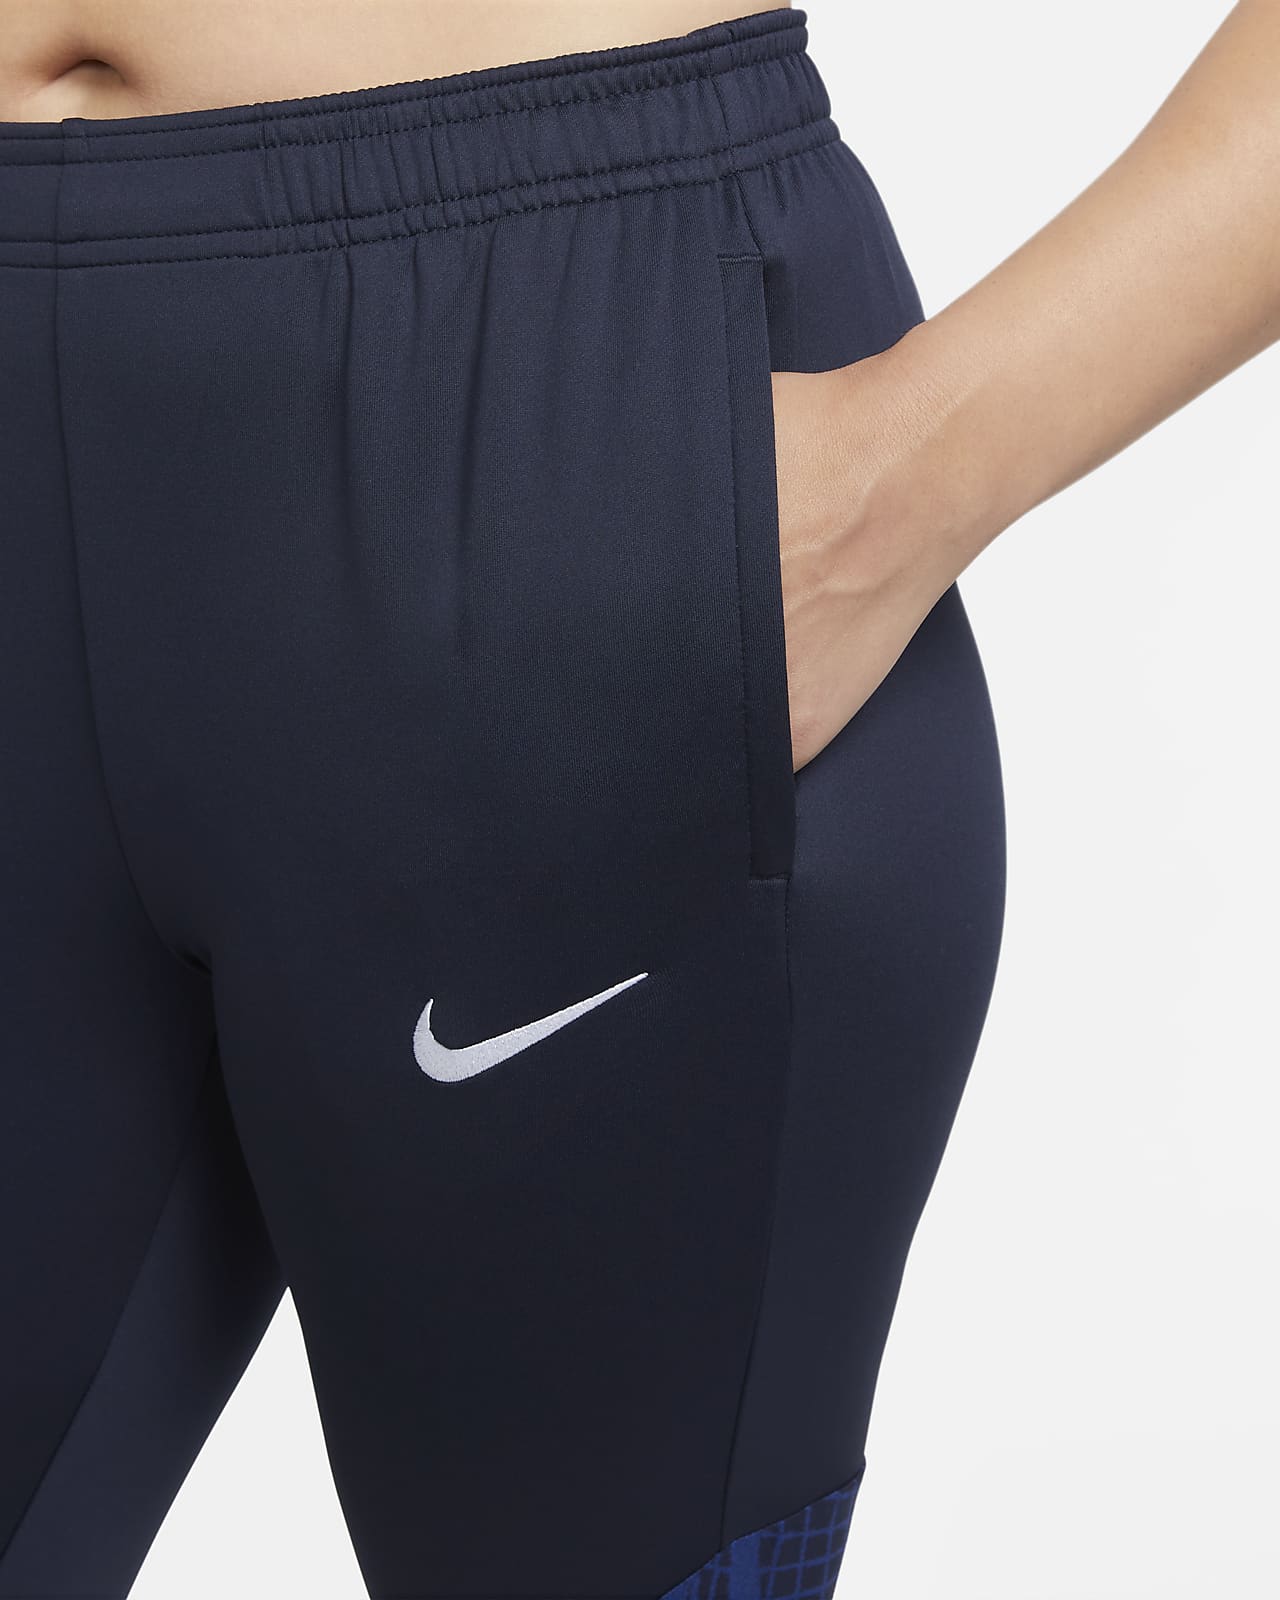 Nike Women's Dri-FIT Academy Soccer Pants